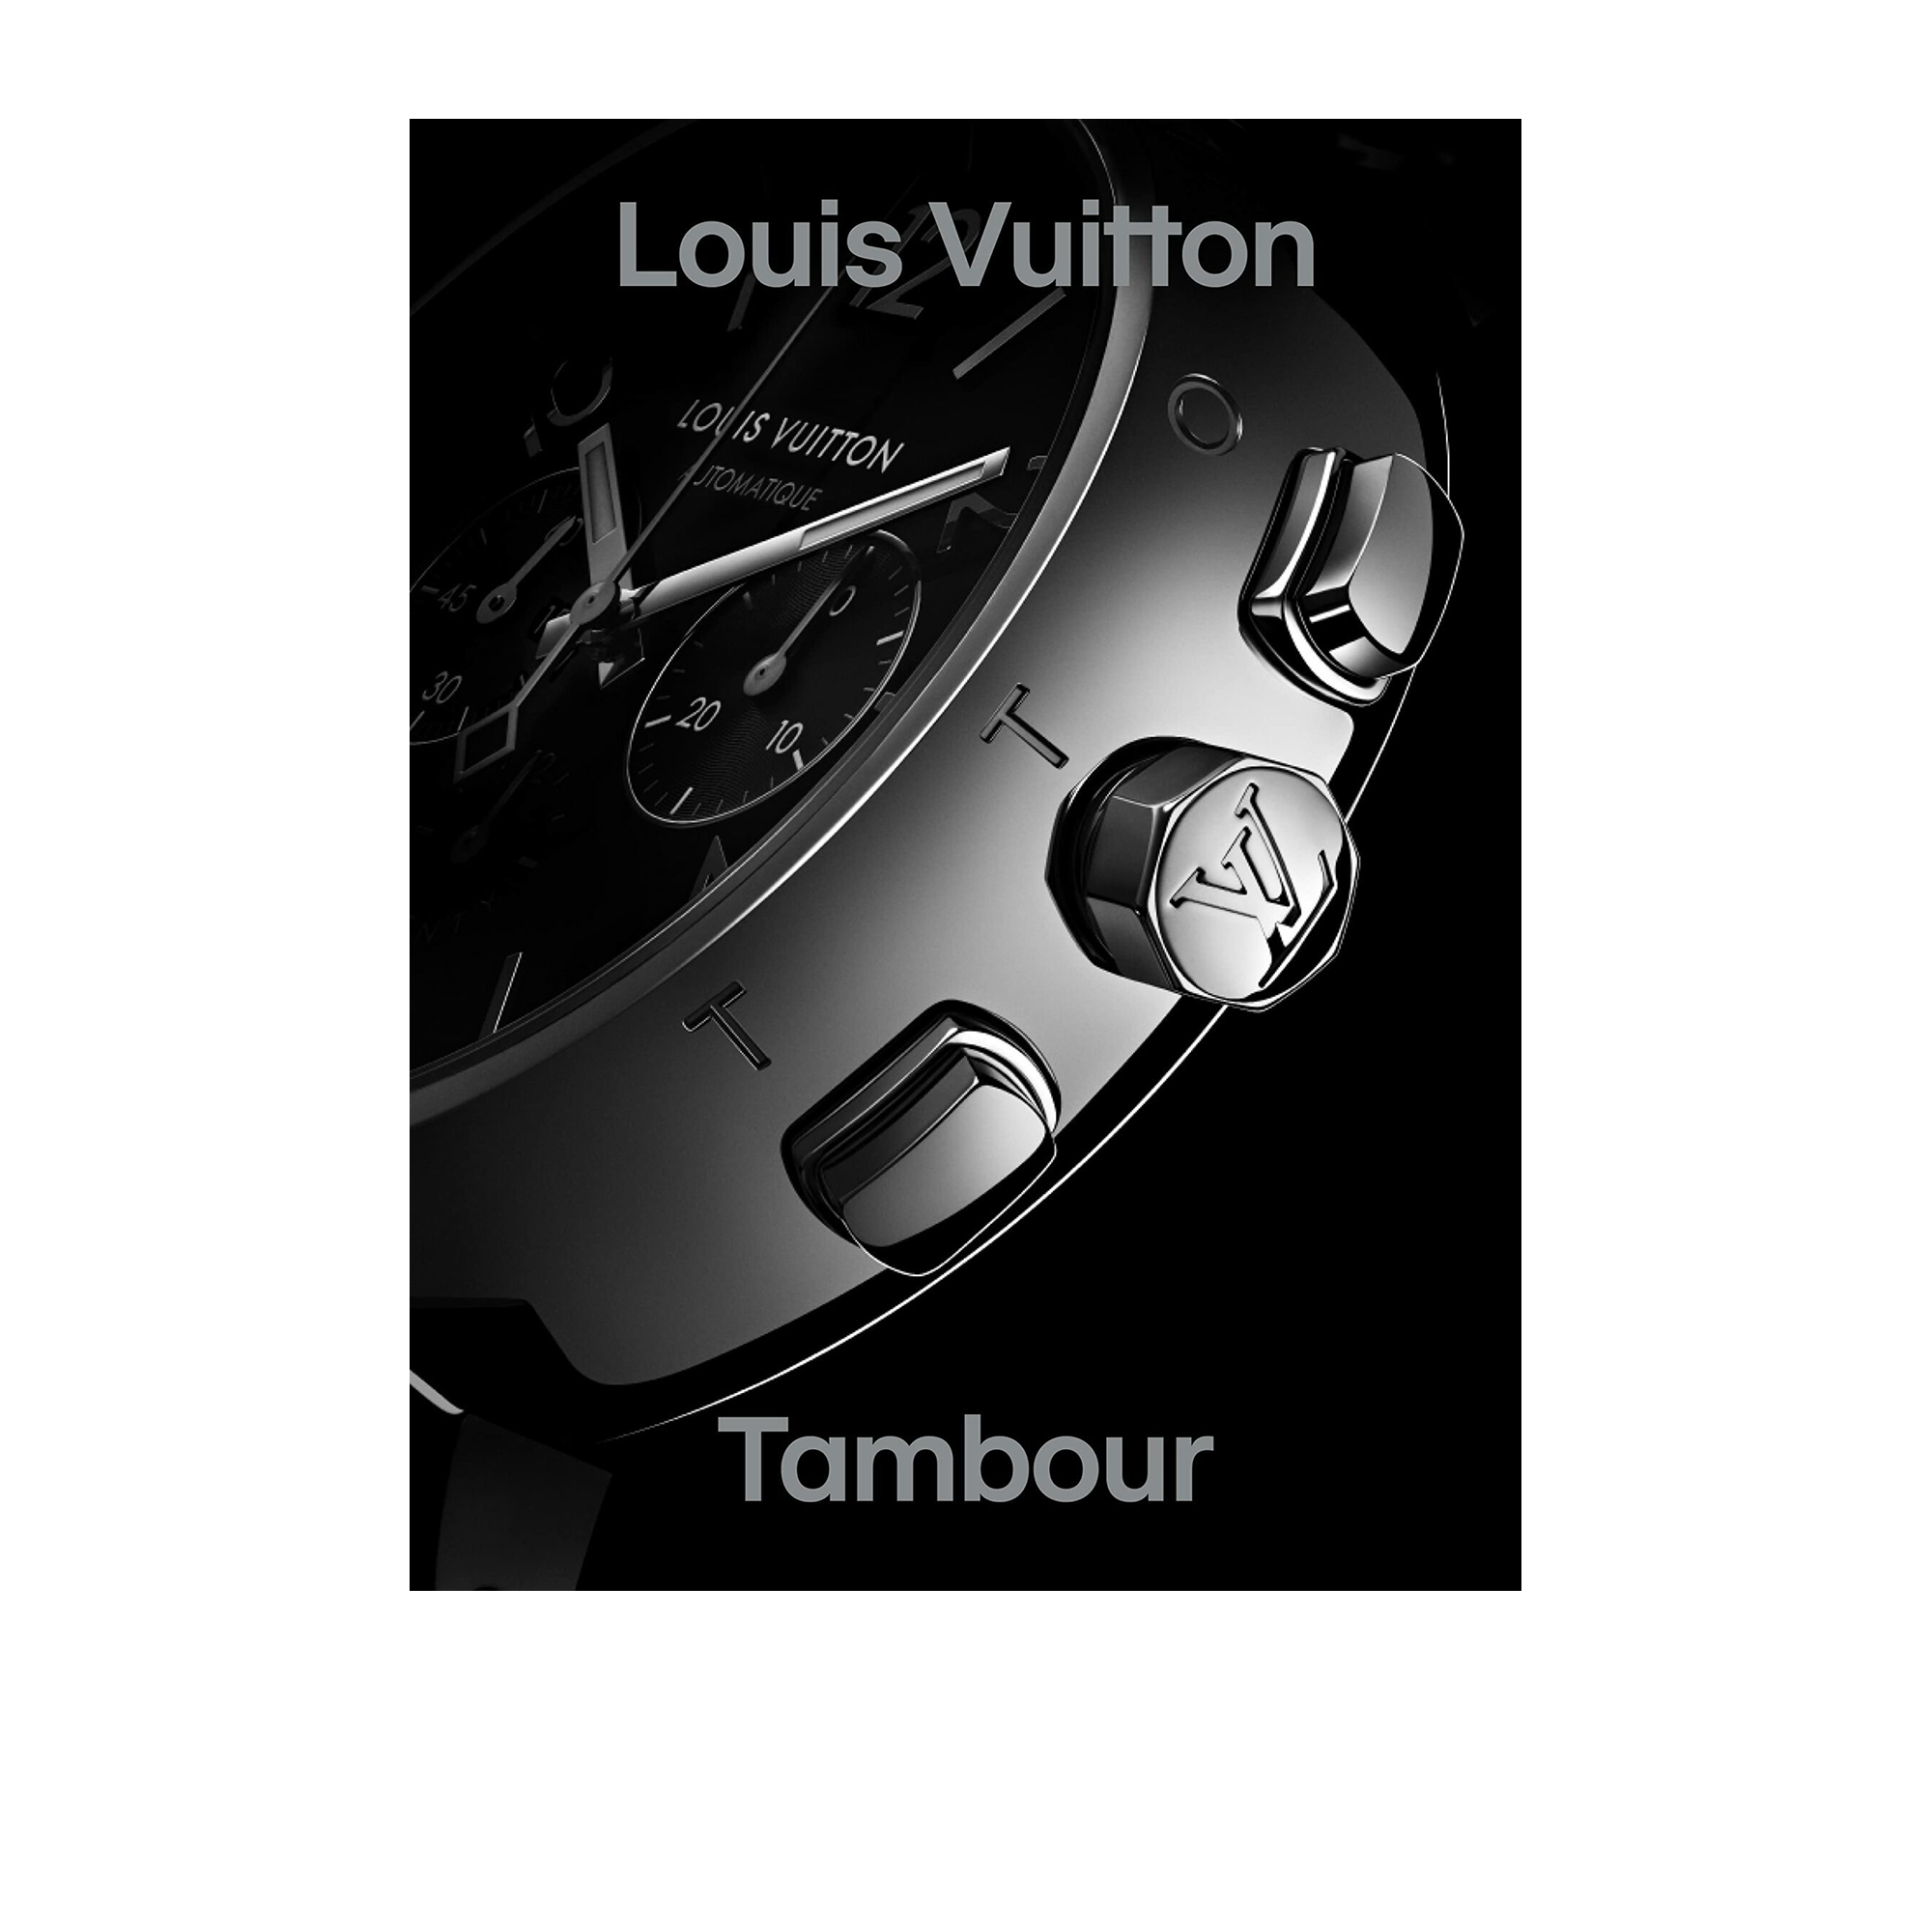 Louis Vitton Tambour Coffee Table Book